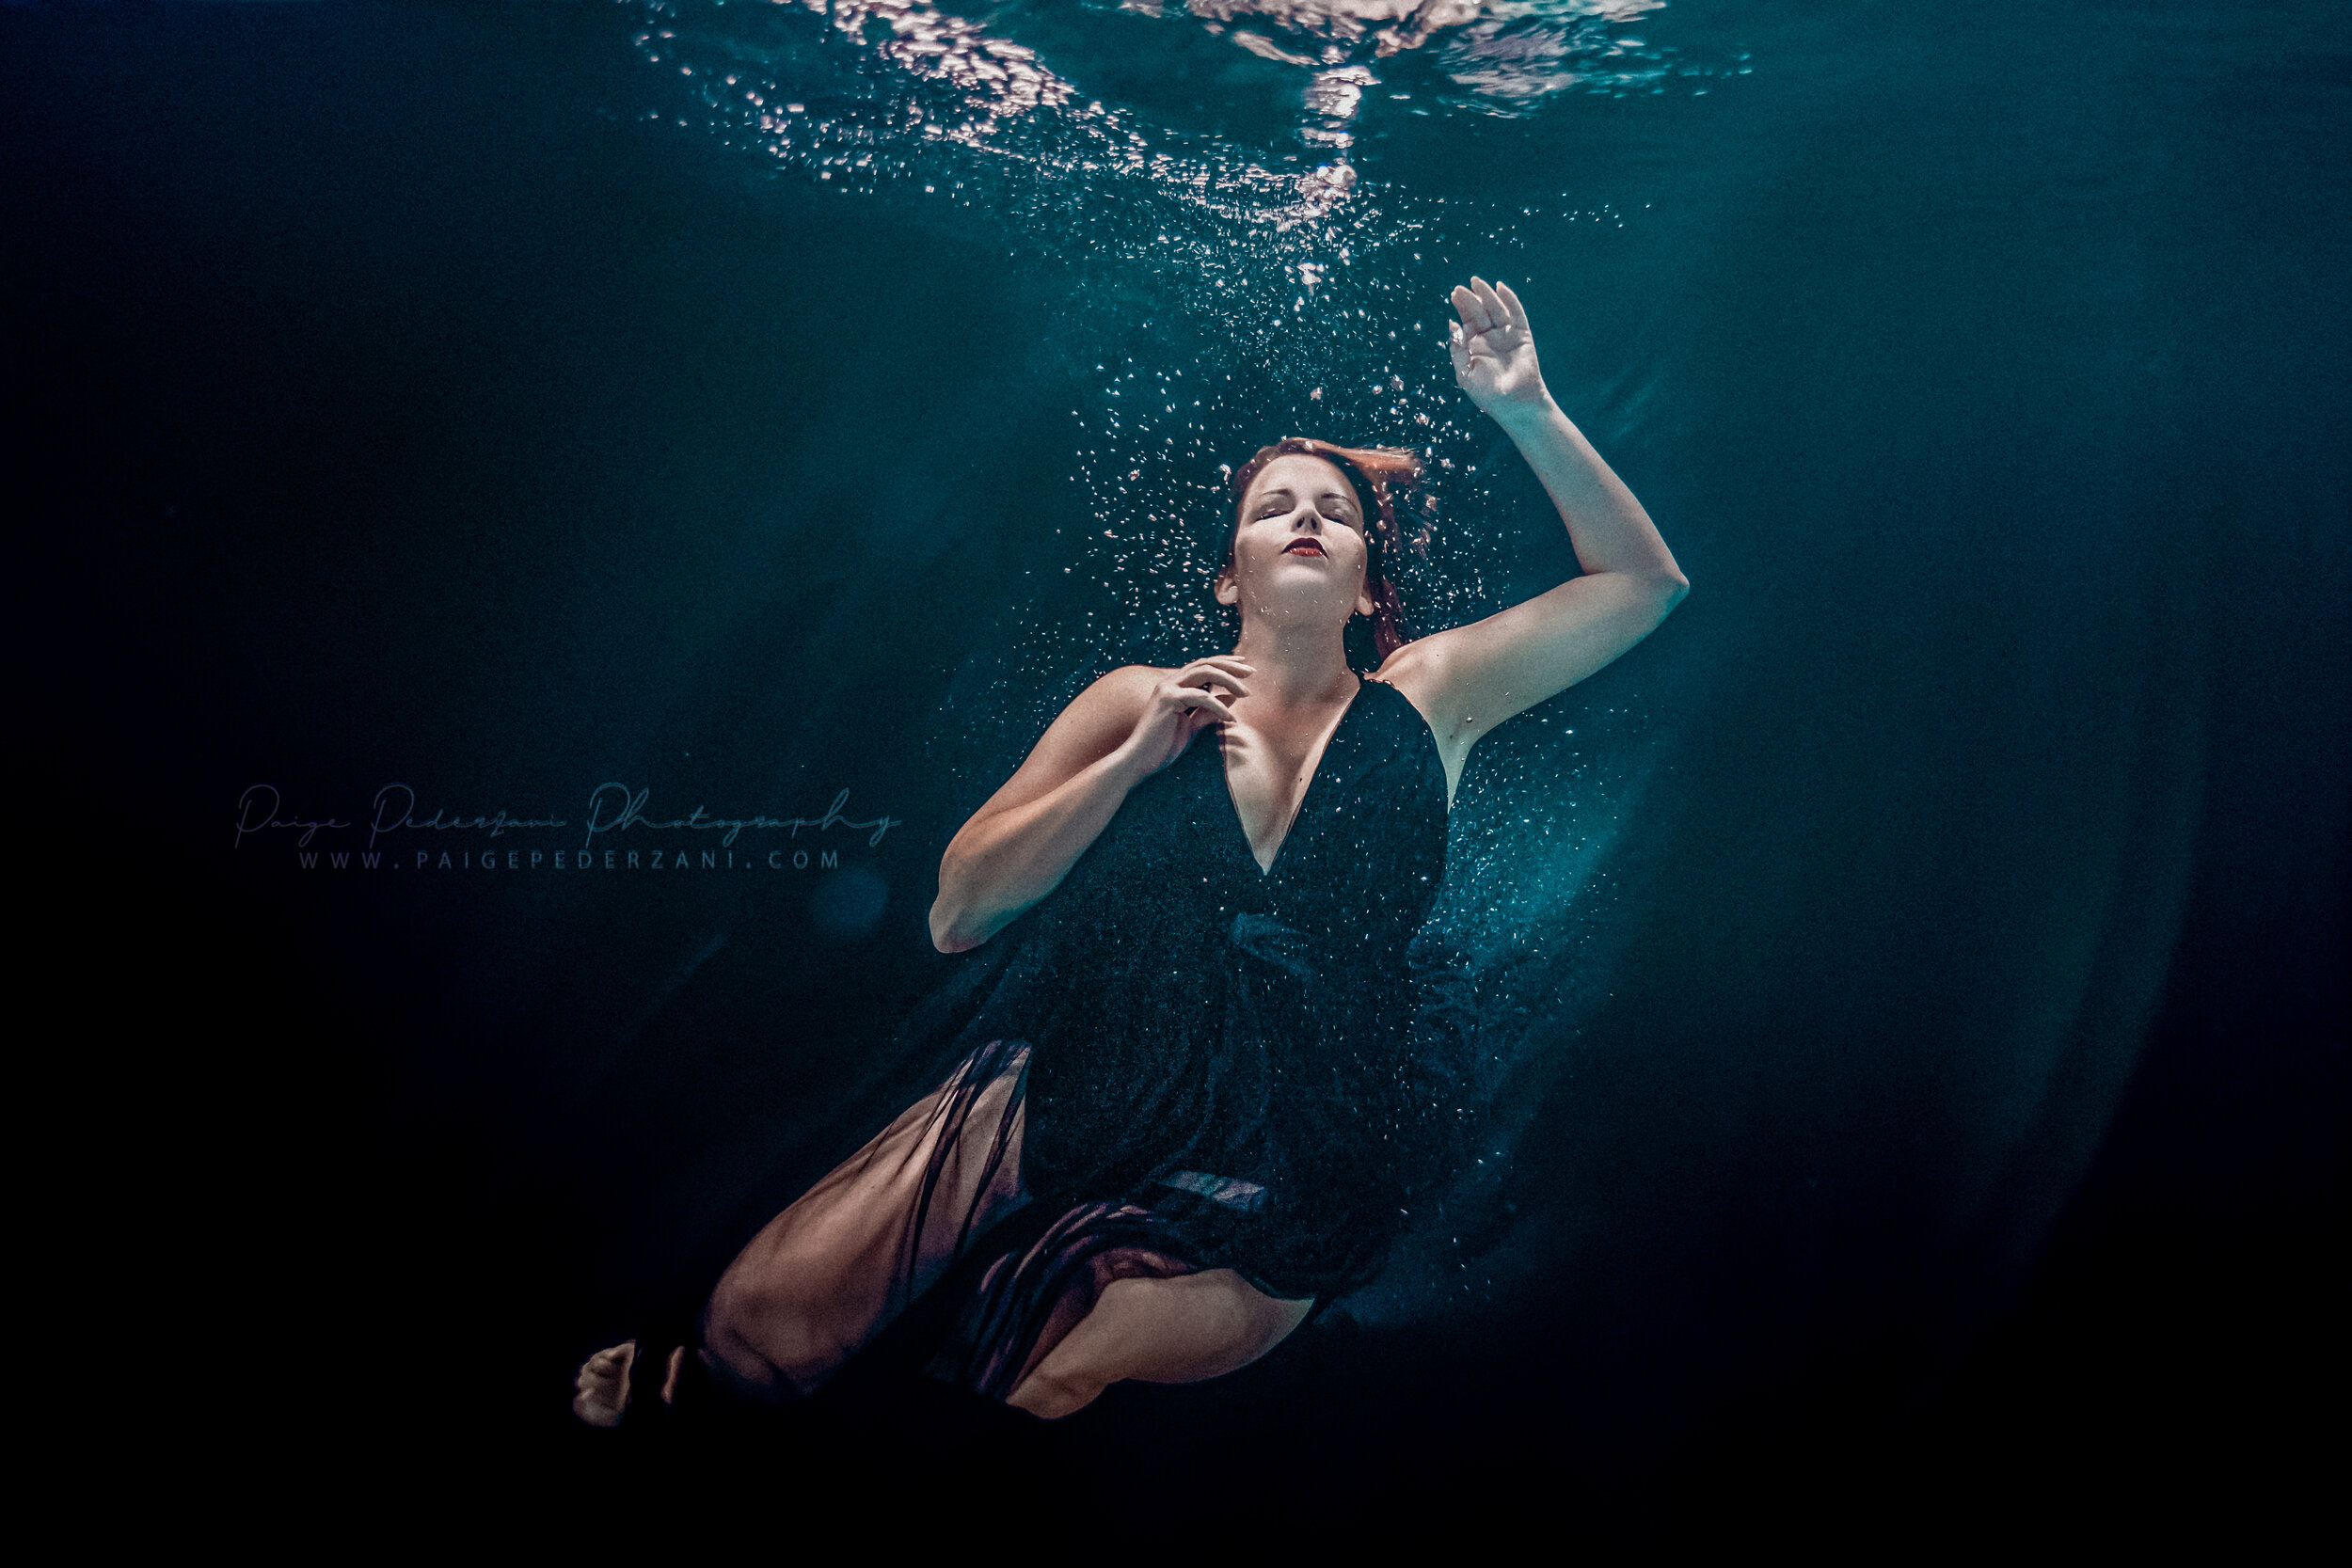 paige pederzani photography _ melissa _ underwater-1.jpg